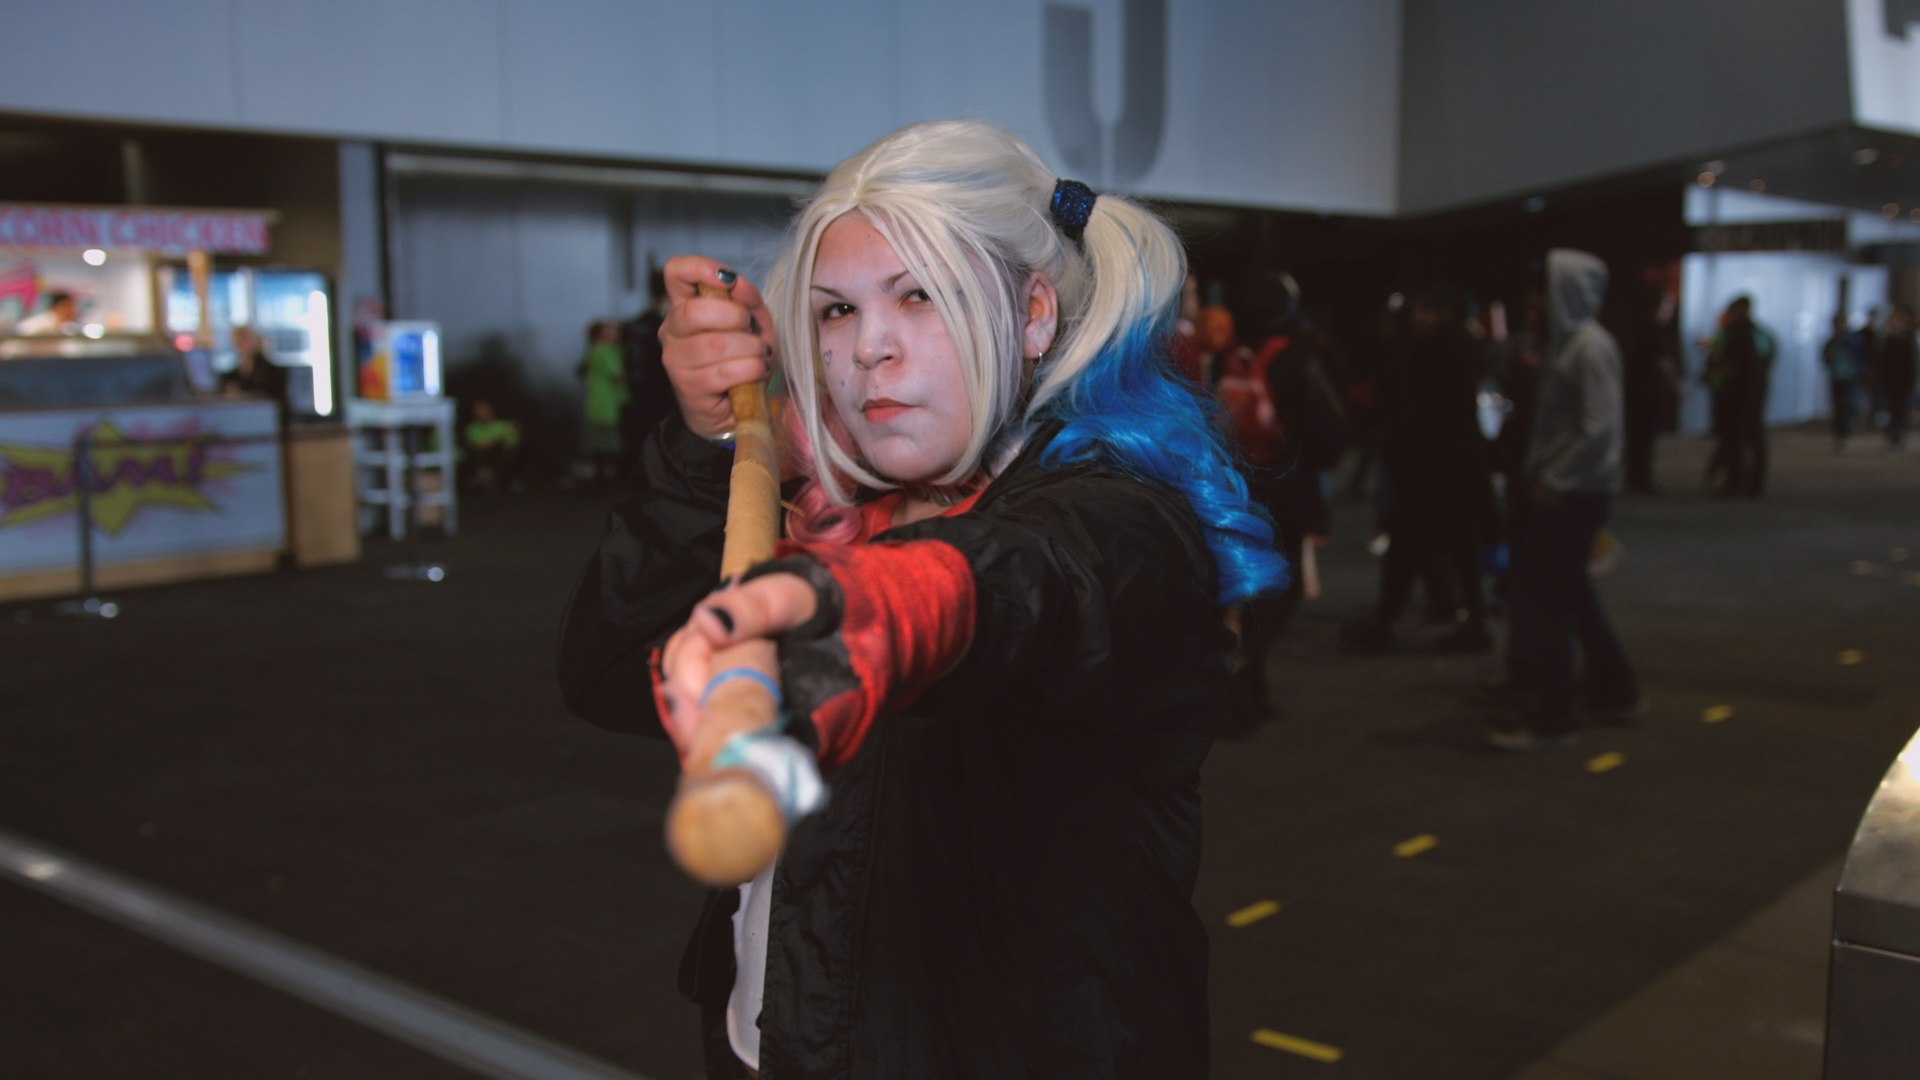 Harley Quinn cosplayer aiming a field hockey stick like a long gun.